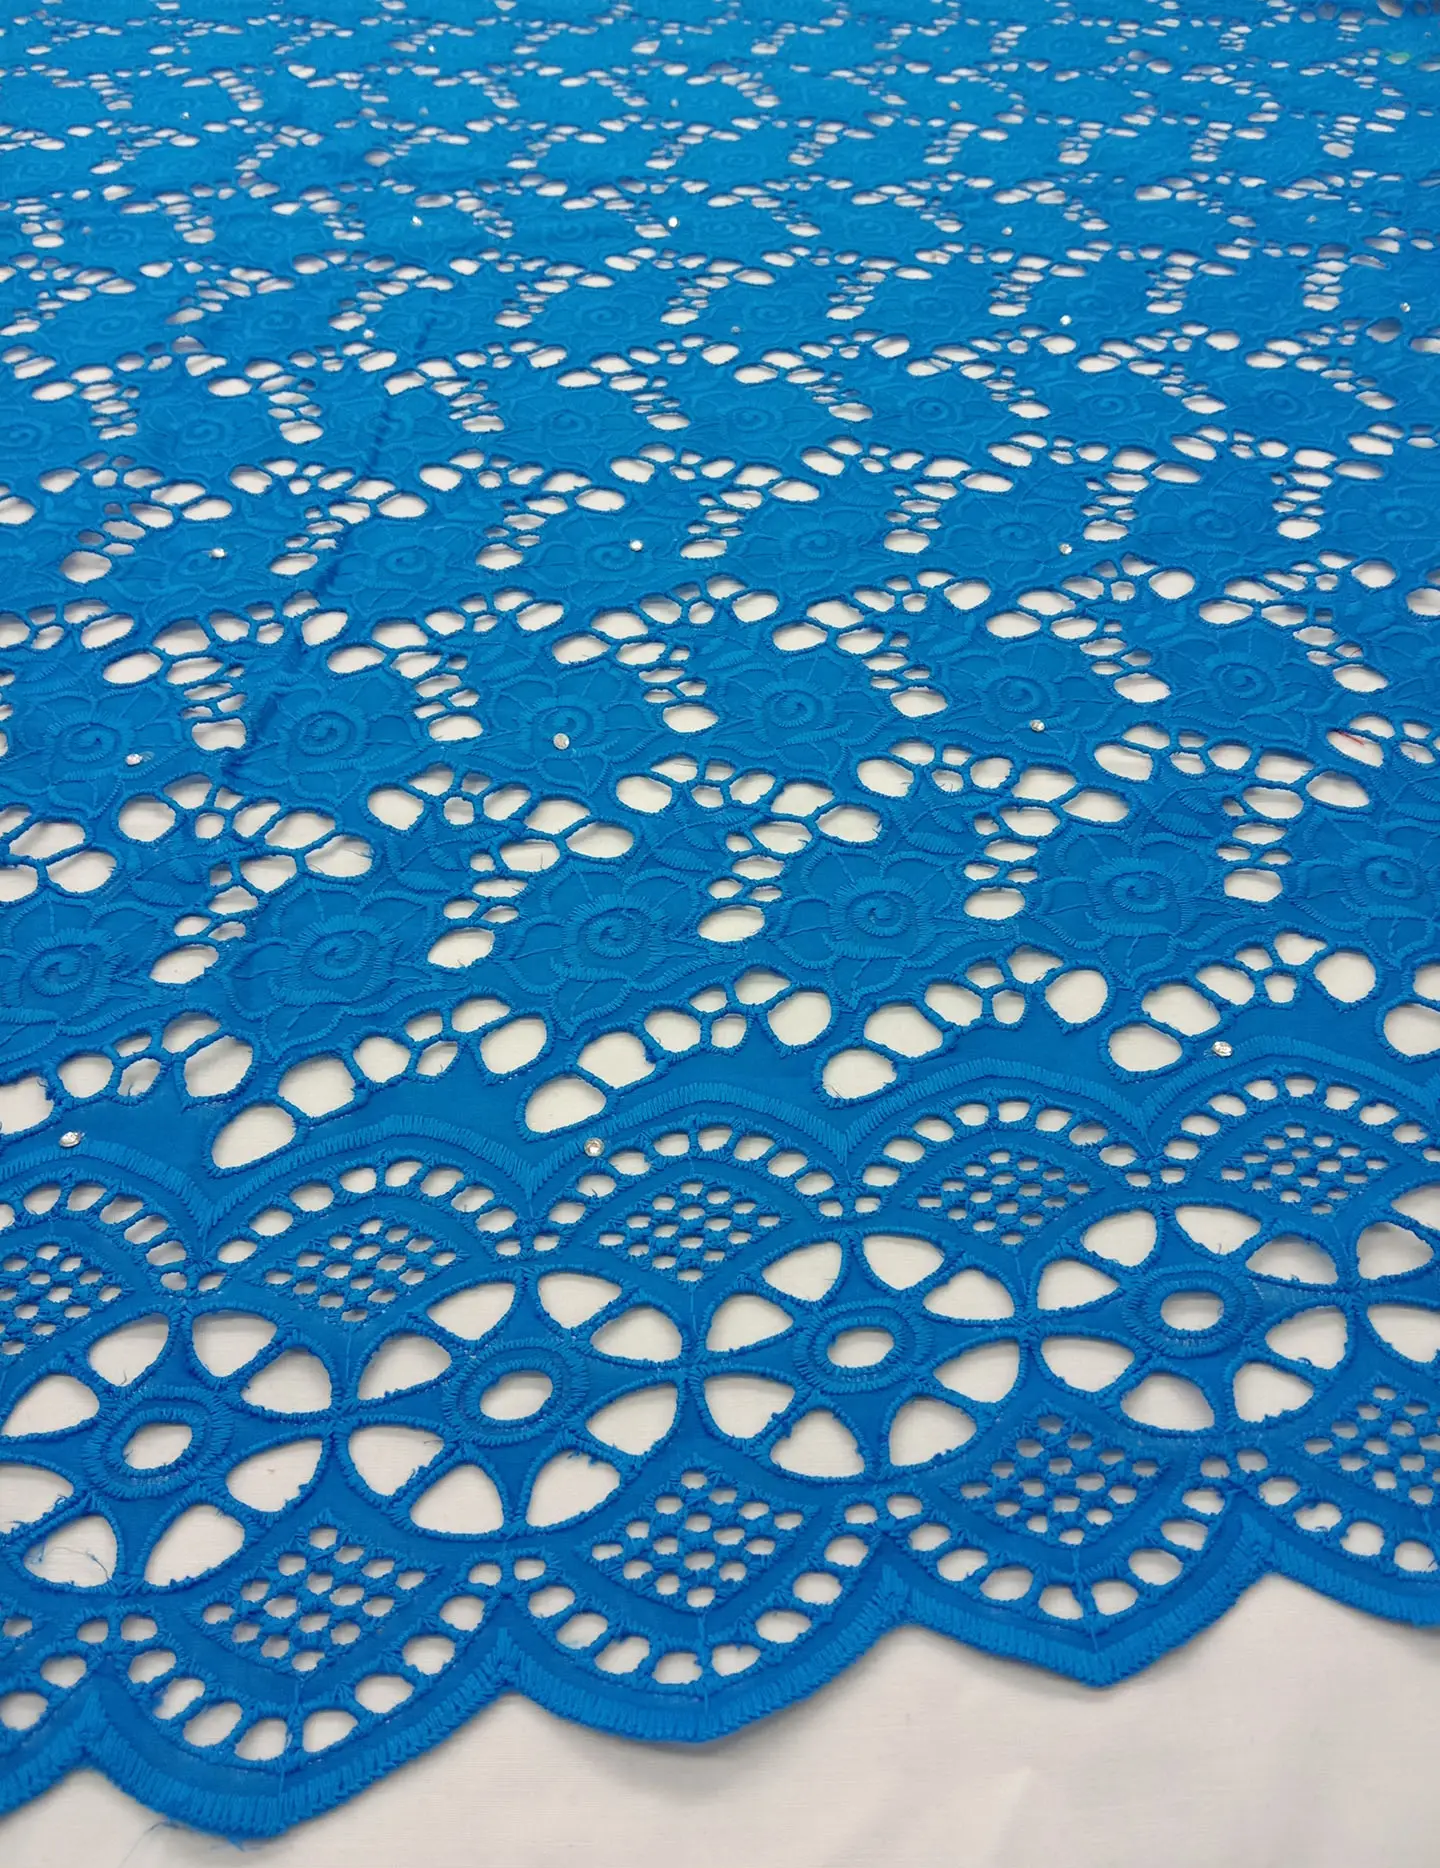 PC Voile Lace Fabric Stickerei Polish Lace Fabric mit Hot Fix Lieferant aus Indien Nigerian Lace Fabric Hersteller